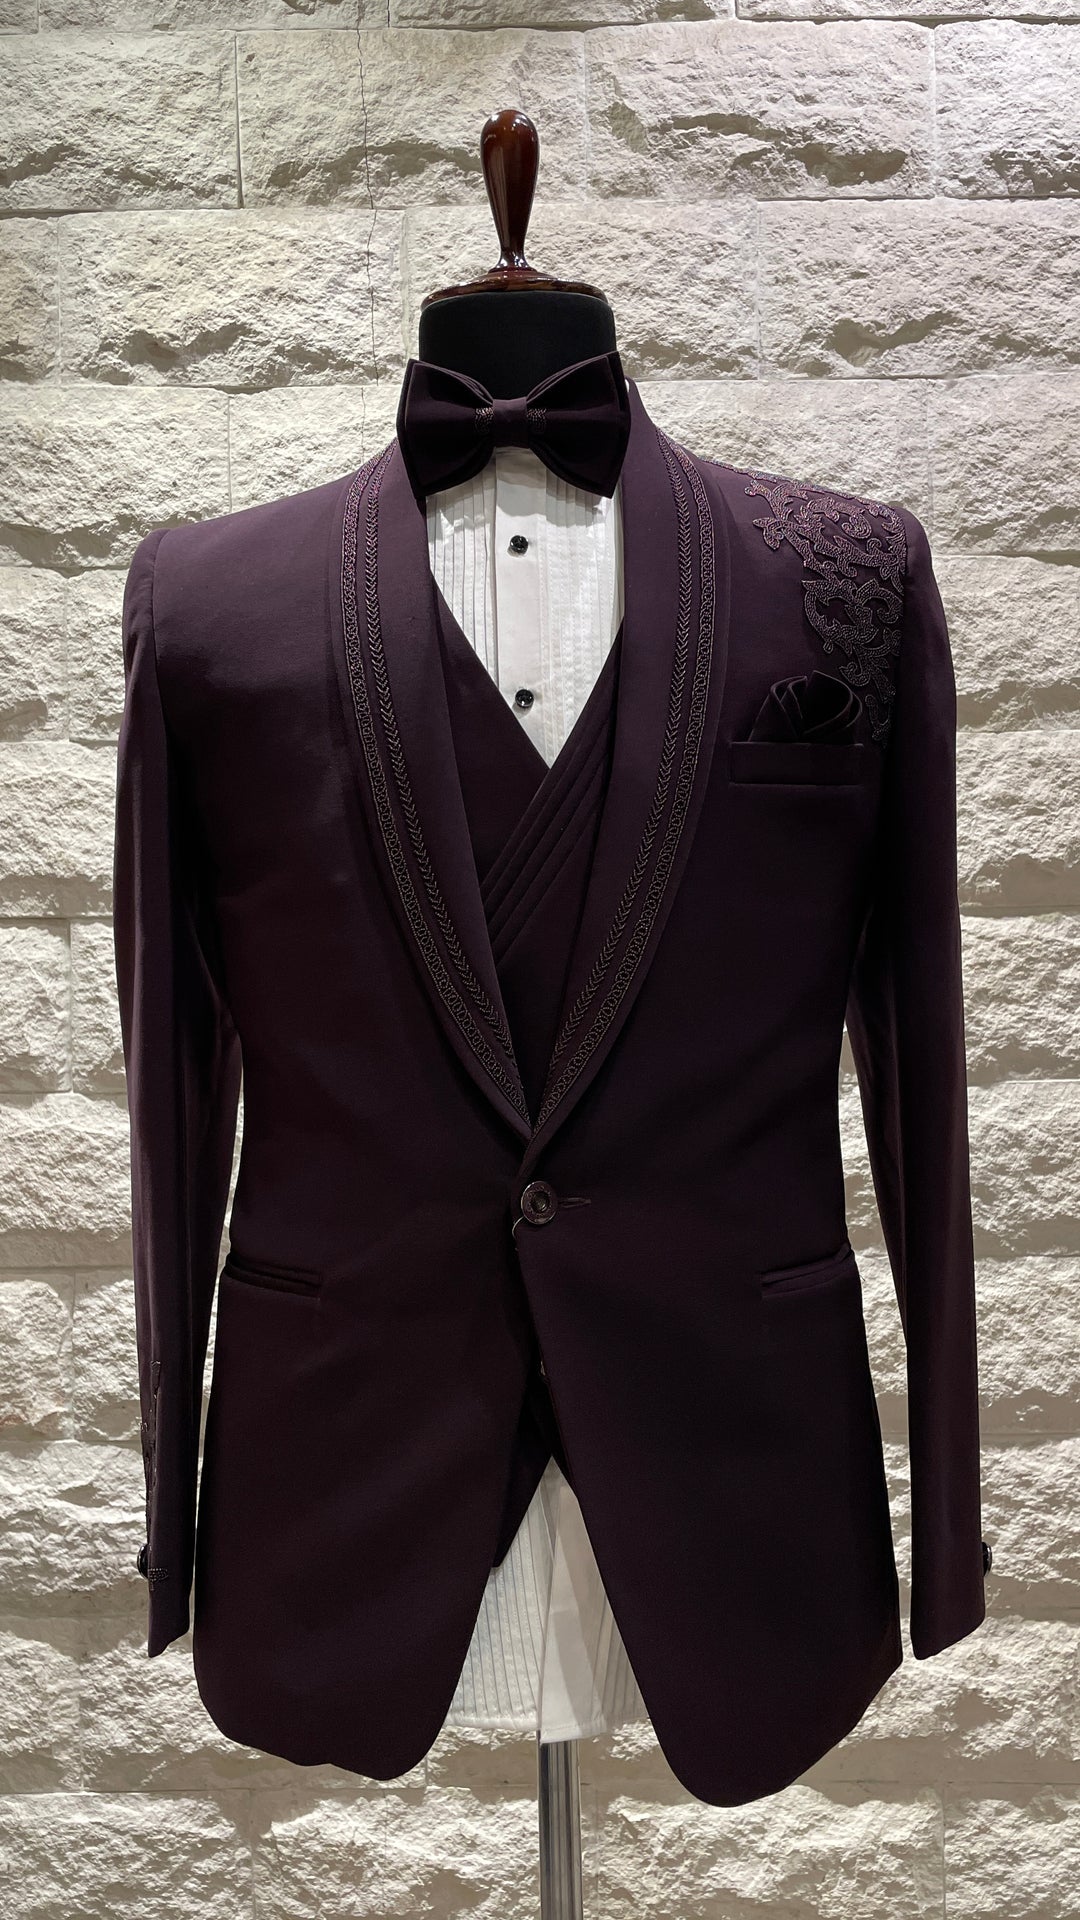 Violet tuxedo with waistcoat and threadwork